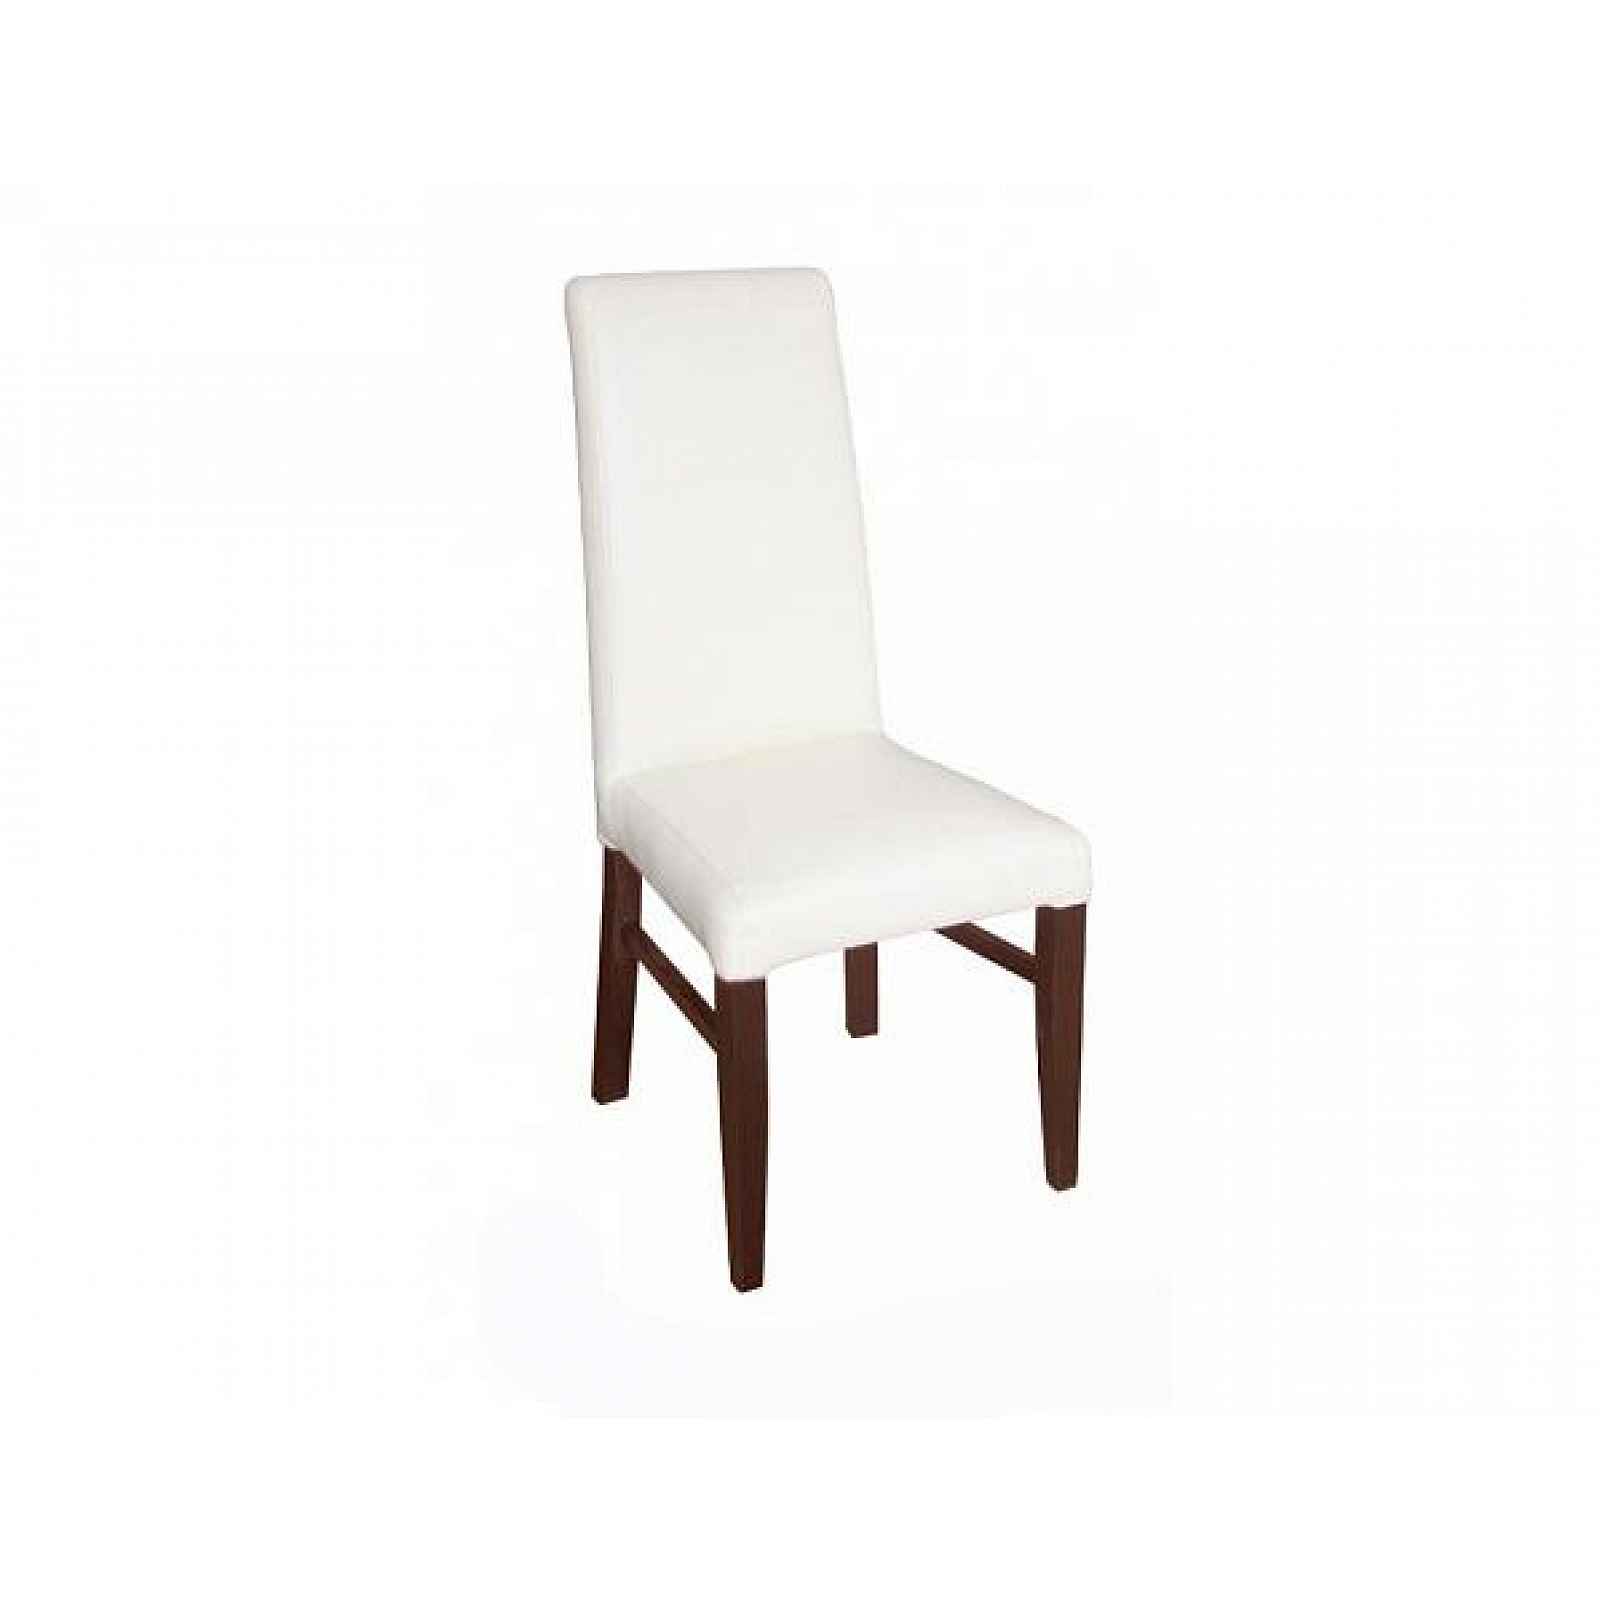 Jídelní židle 58 calvados bílá